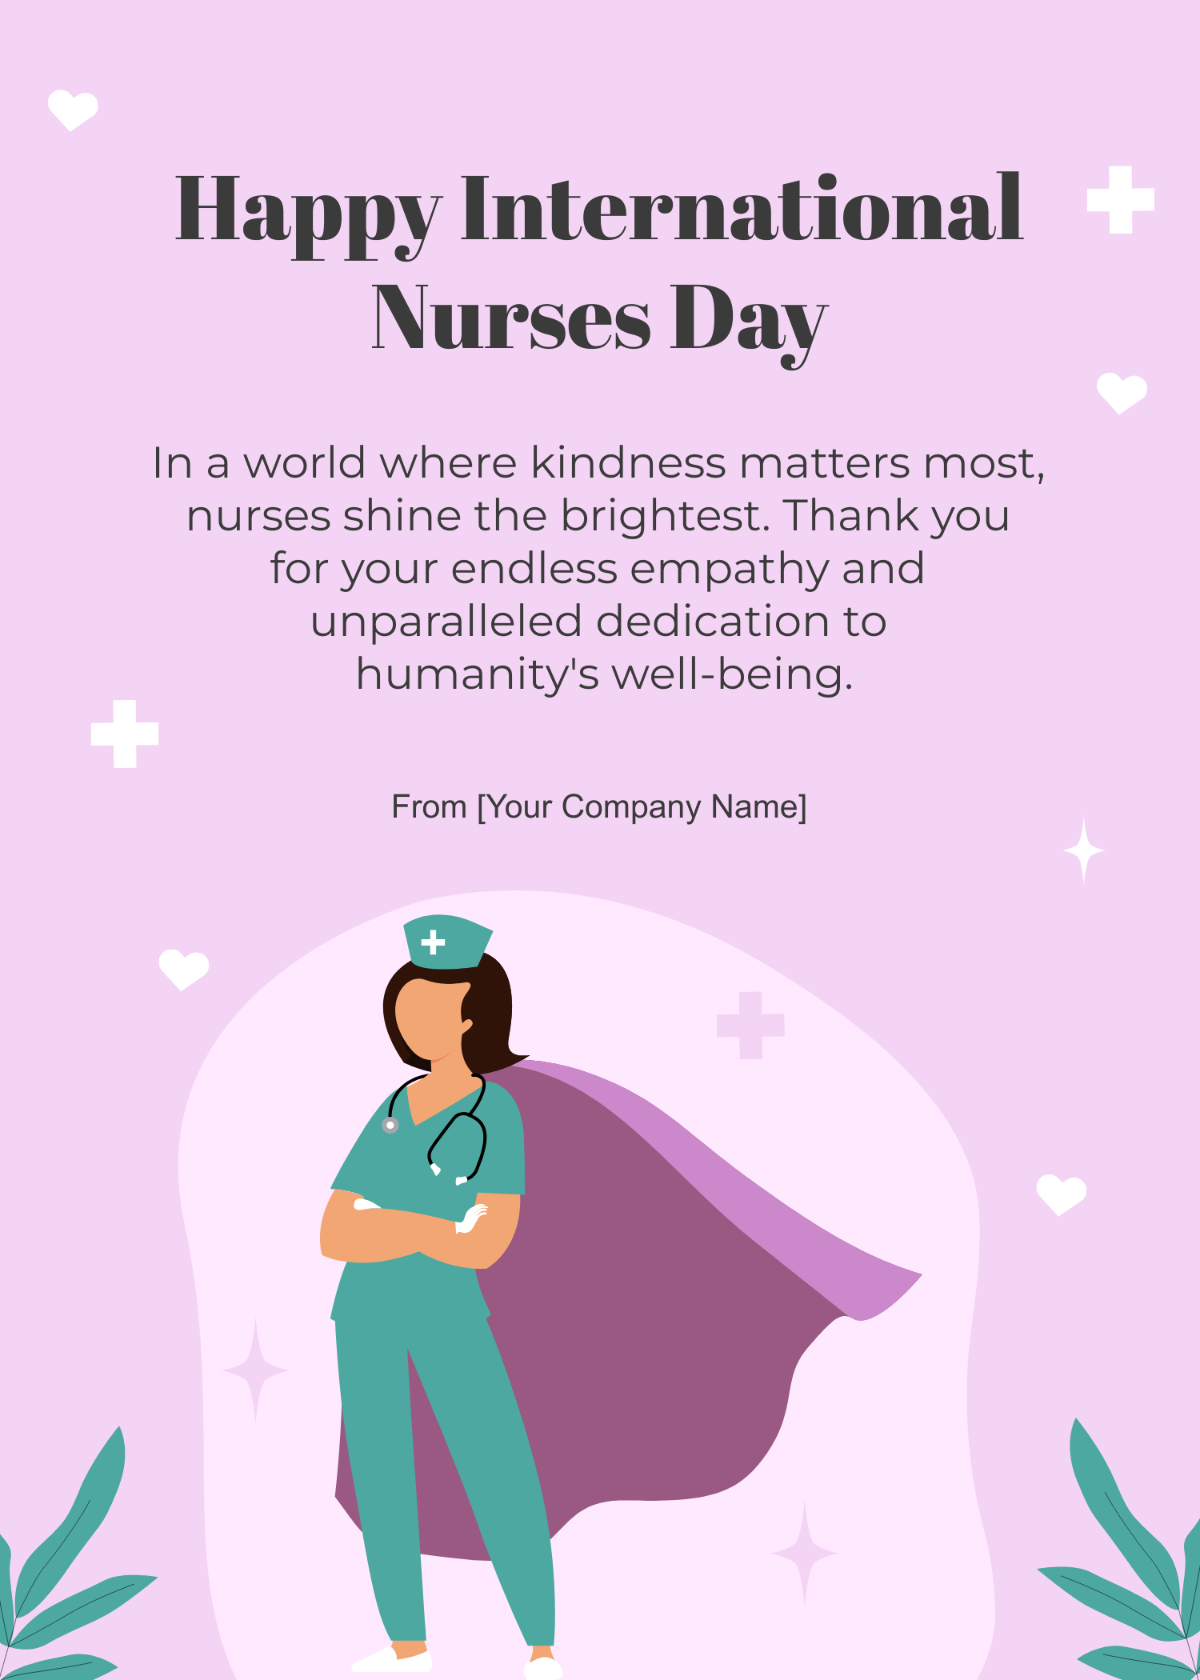 International Nurses Day Message